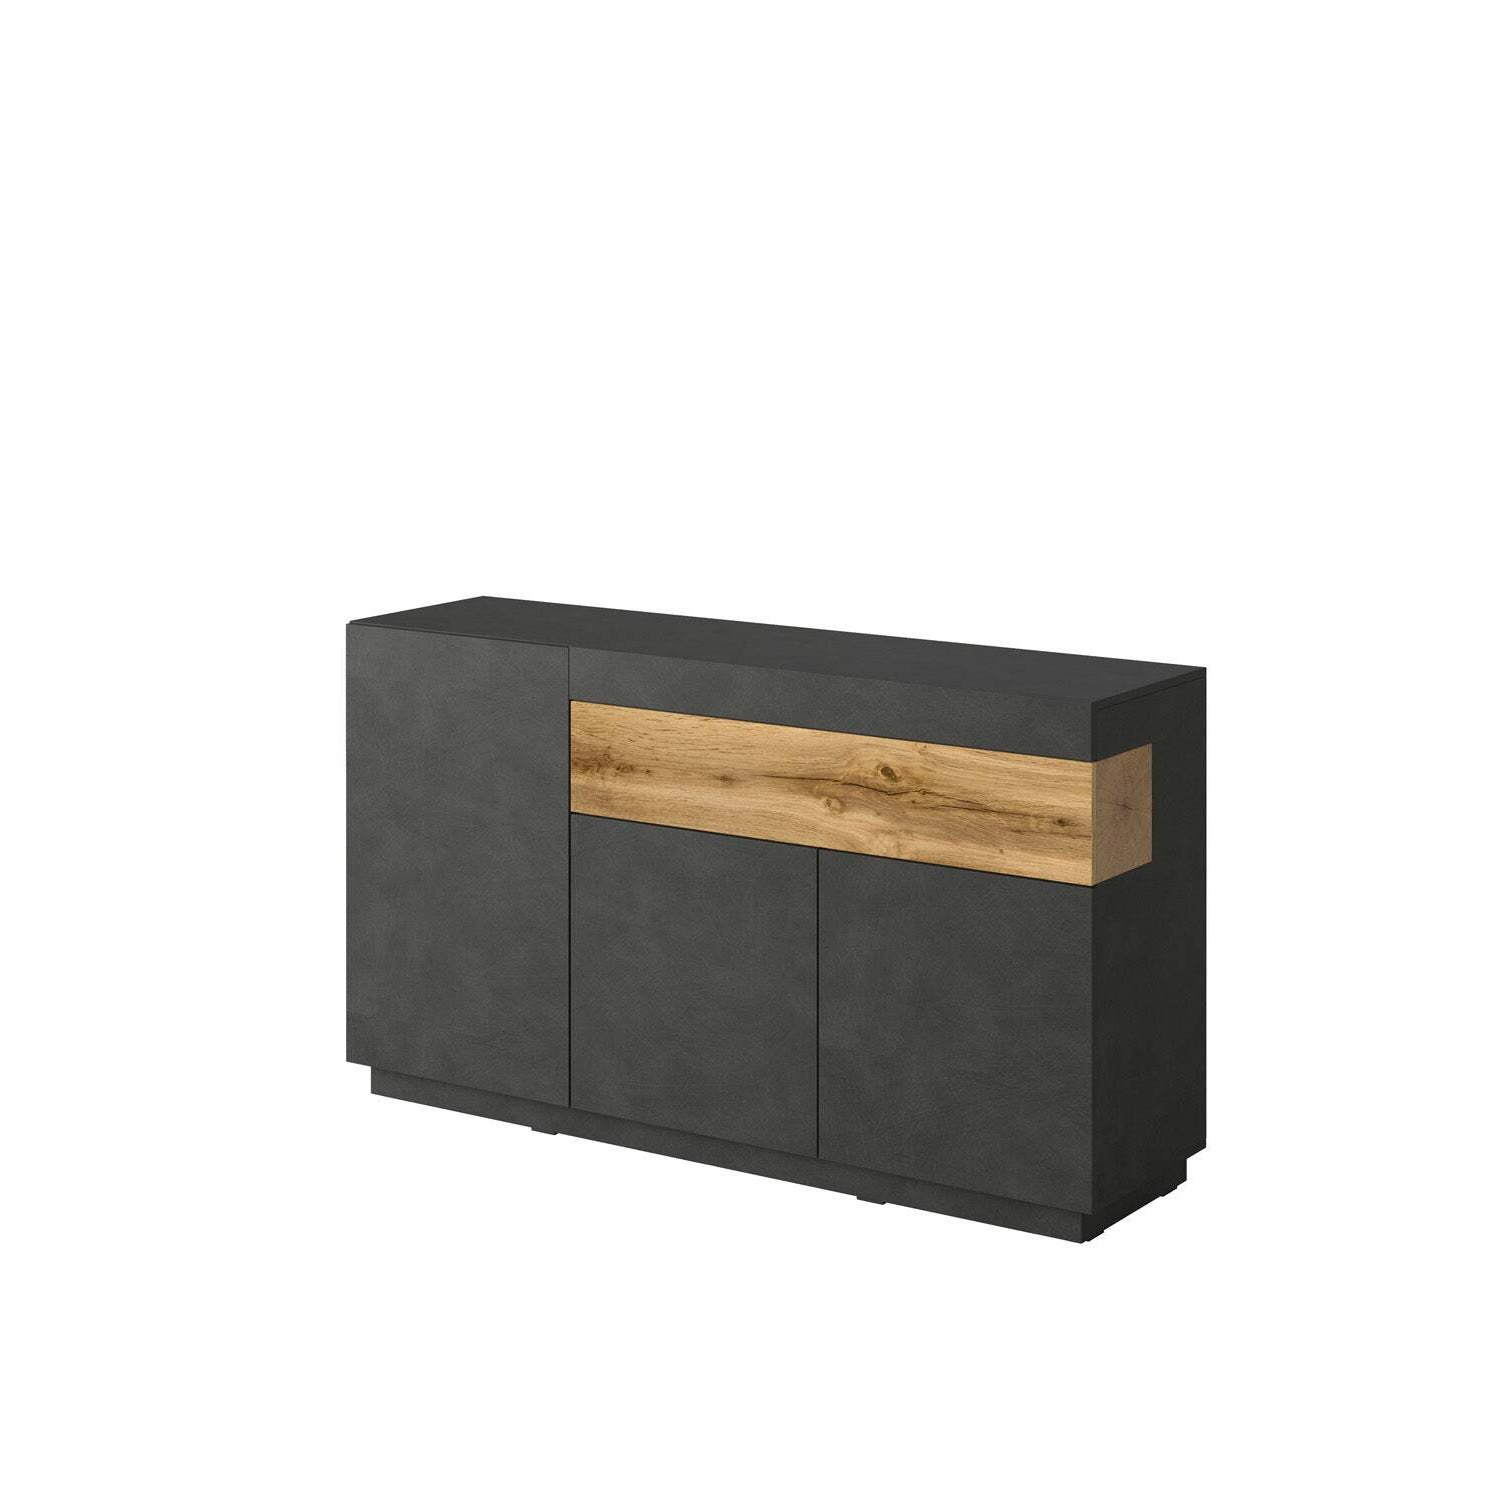 Silke 43 Sideboard Cabinet 150cm - 150cm Matera / Wotan Oak - image 1